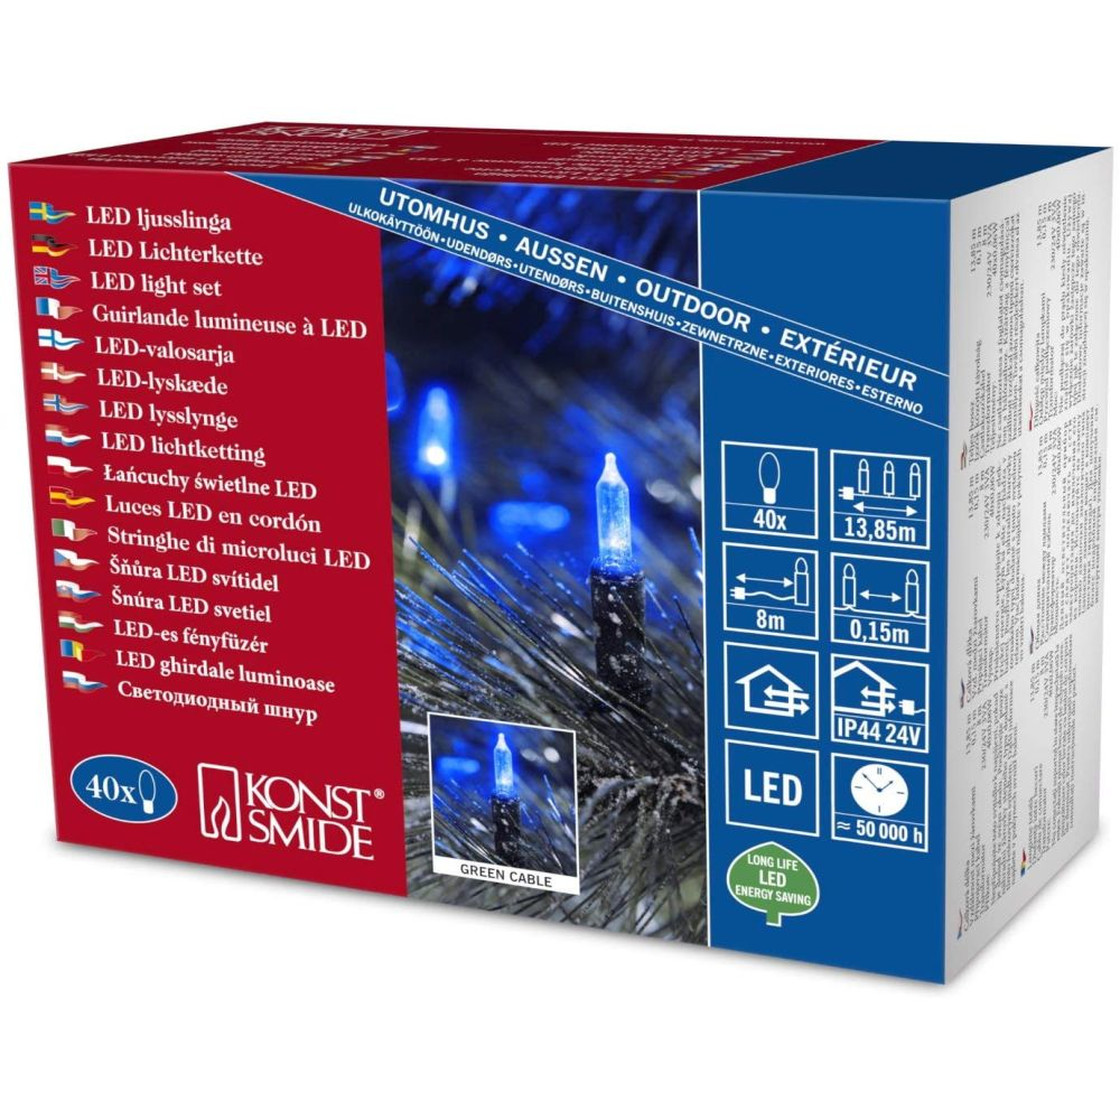 40 Blau Ausse Minilichterkette Konstsmide 24V 6004-400 LED mit Dioden